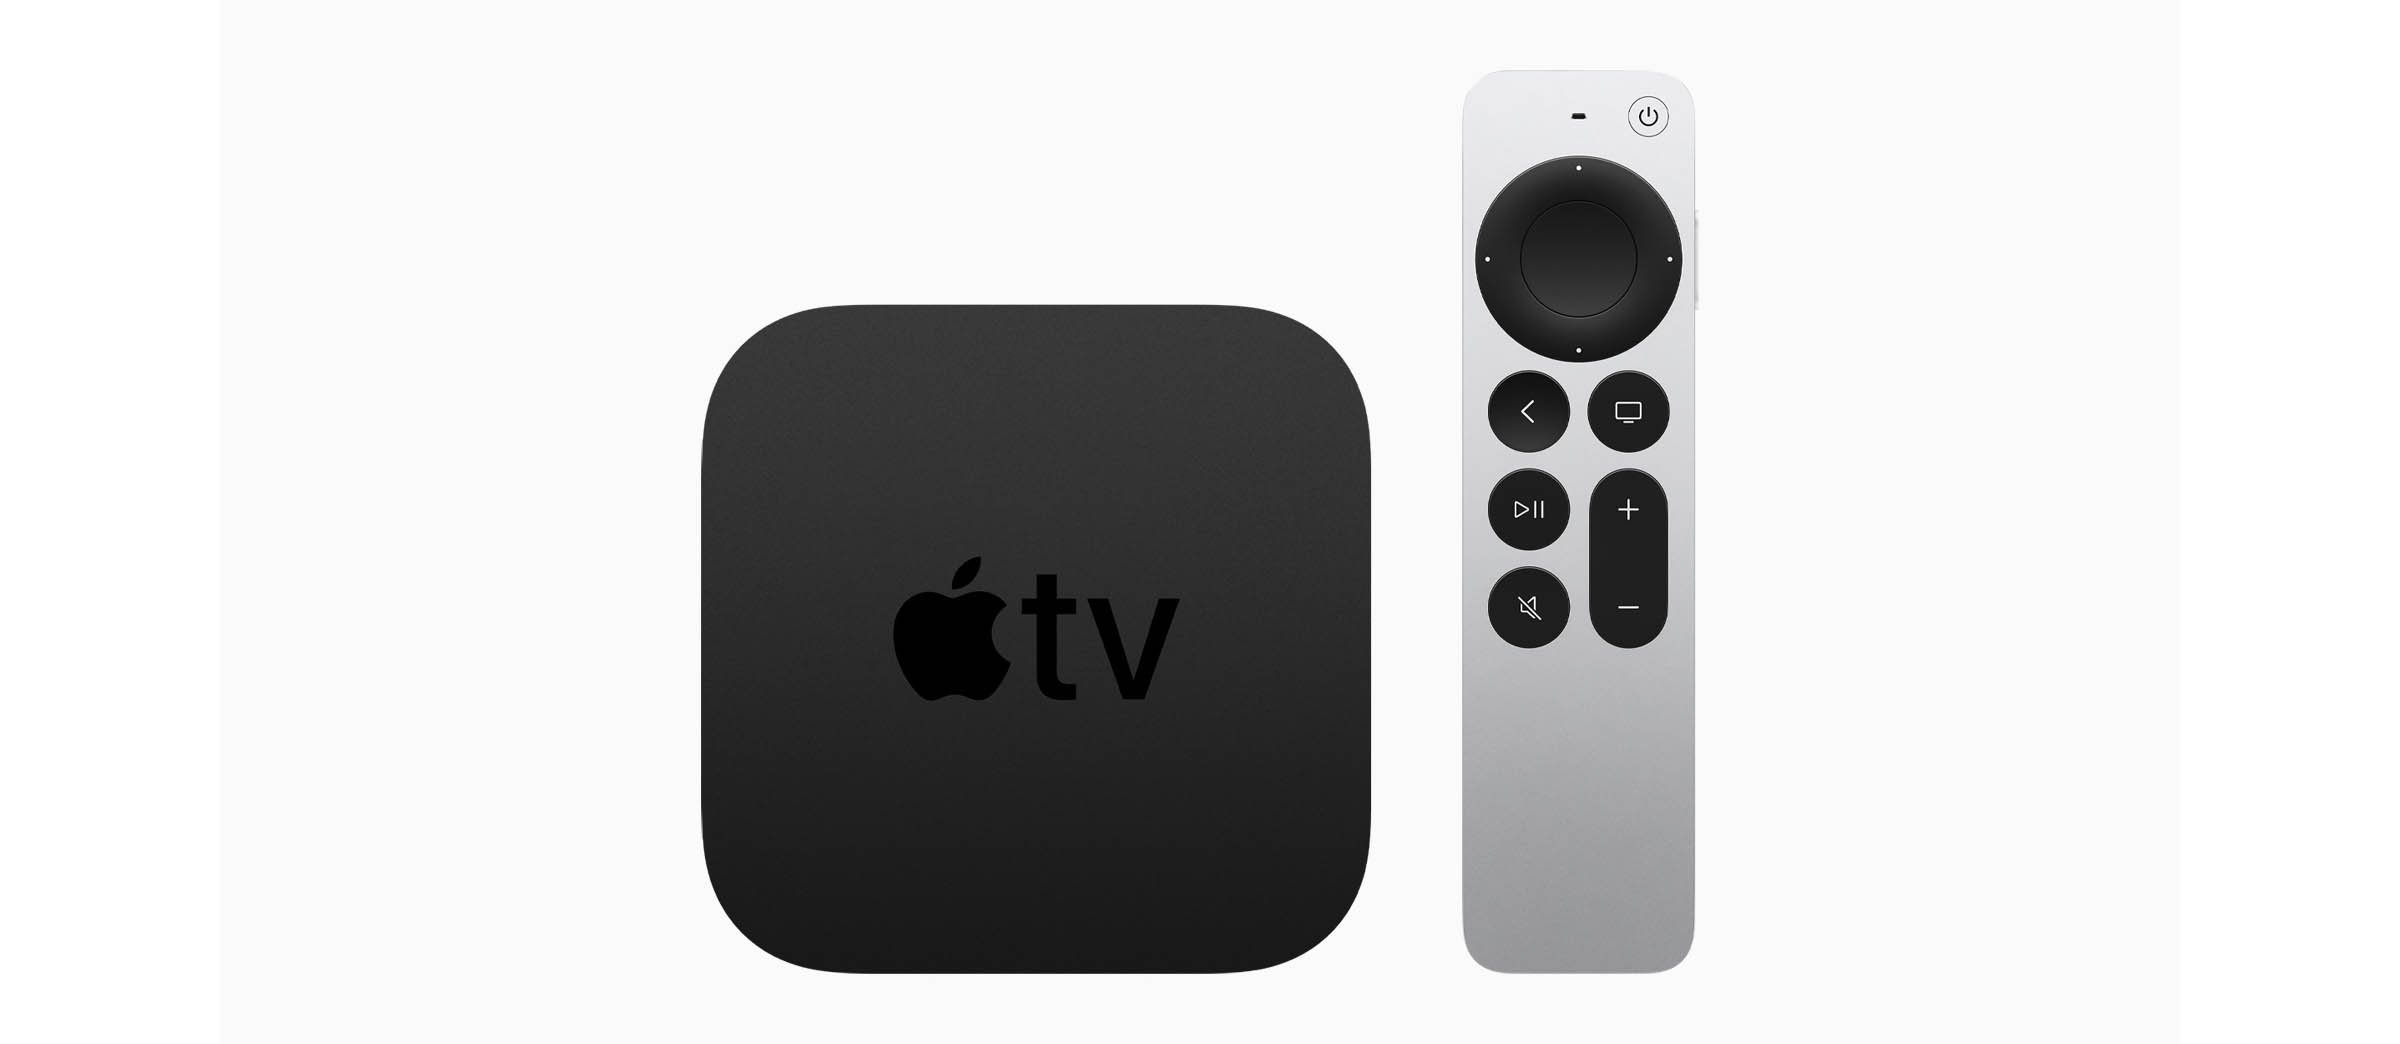 Apple-TV-4K-6th-Gen